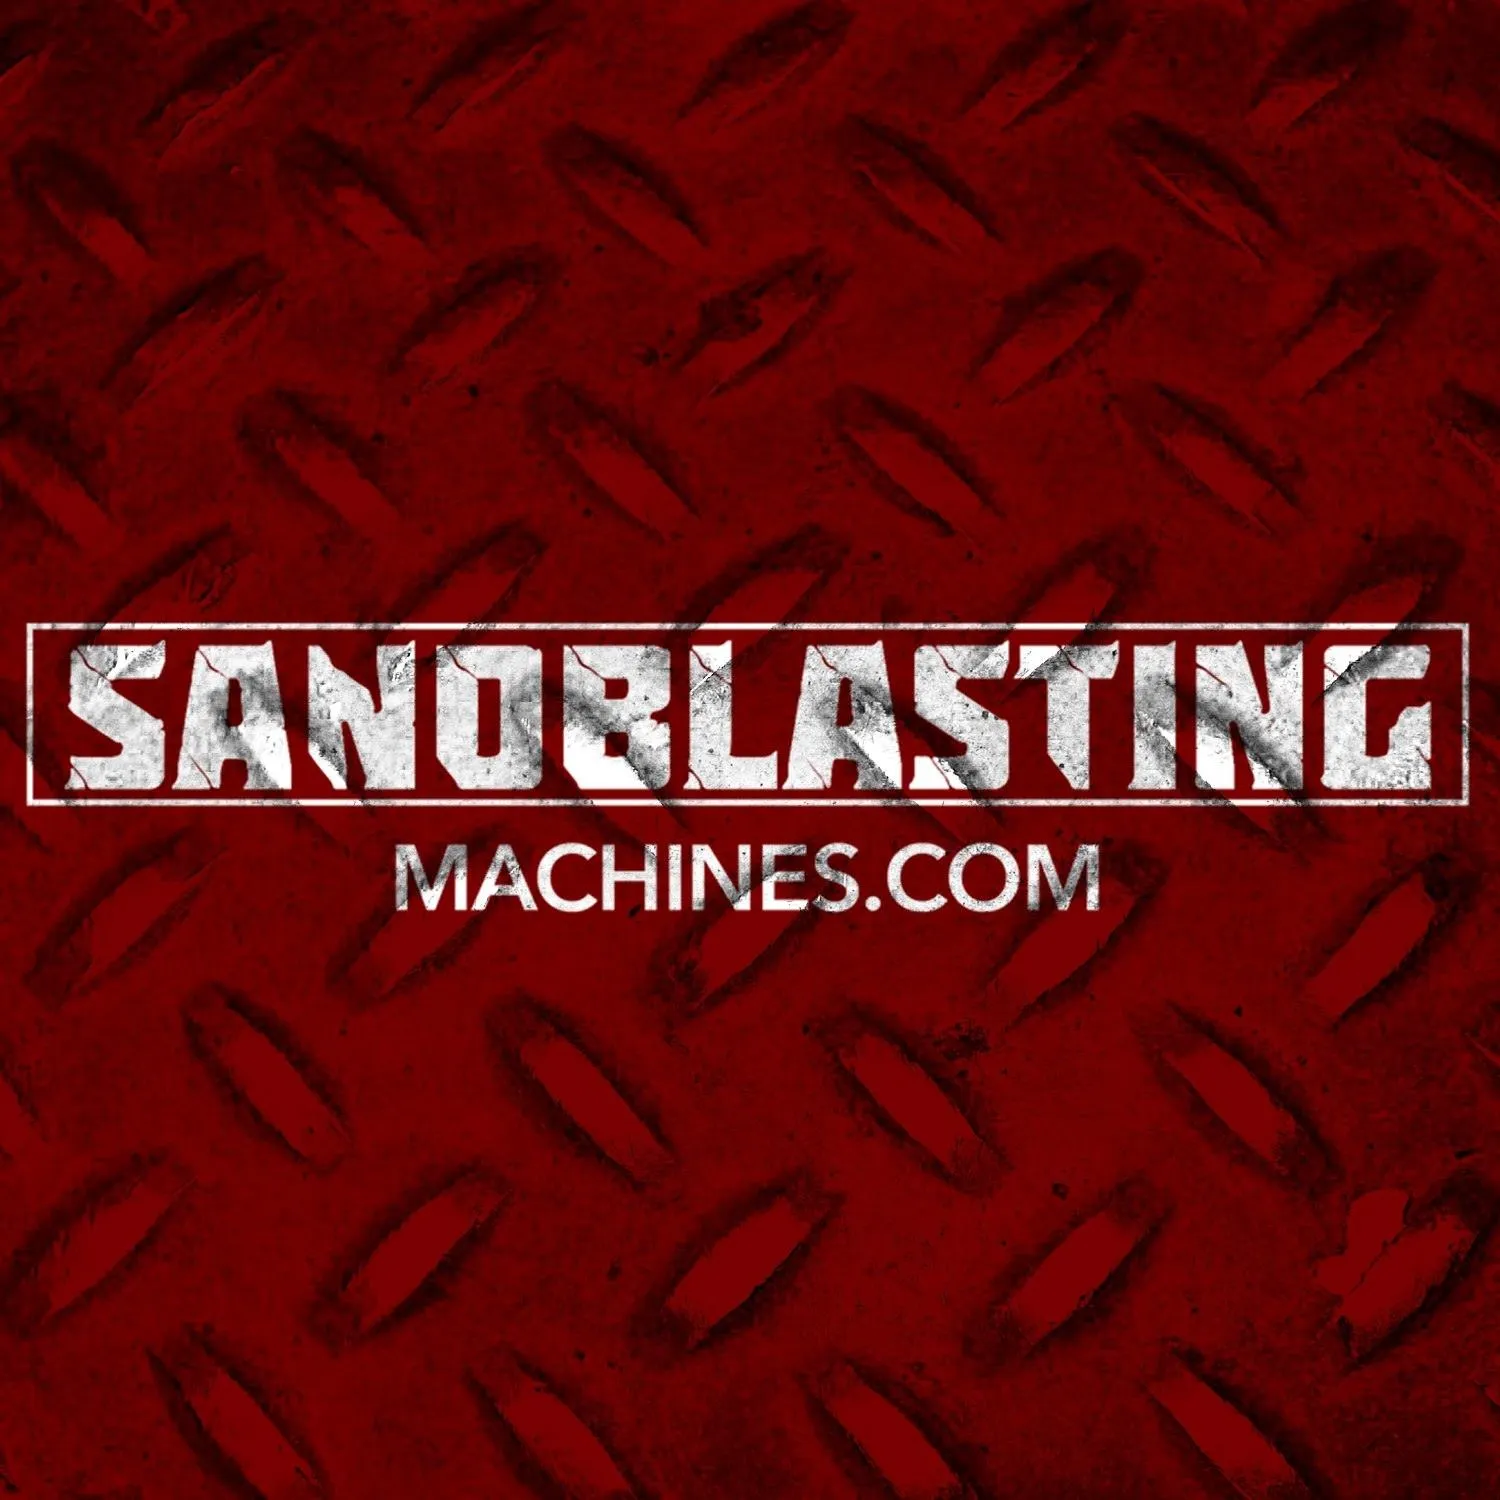 Sandblasting Machines